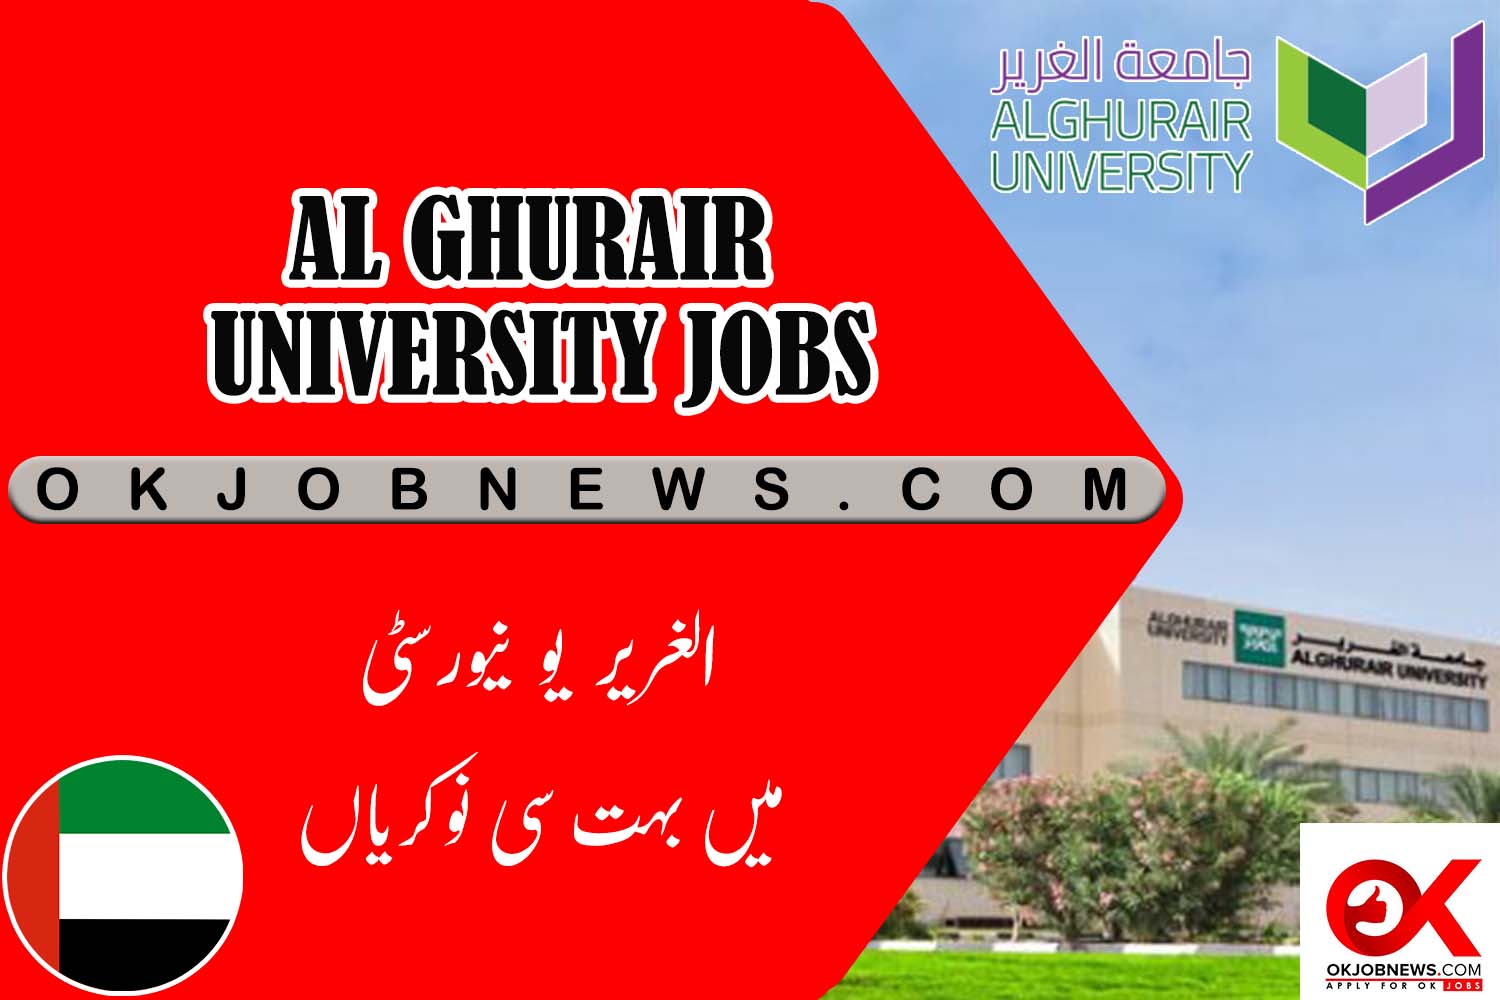 Apply for Al Ghurair University Job Openings